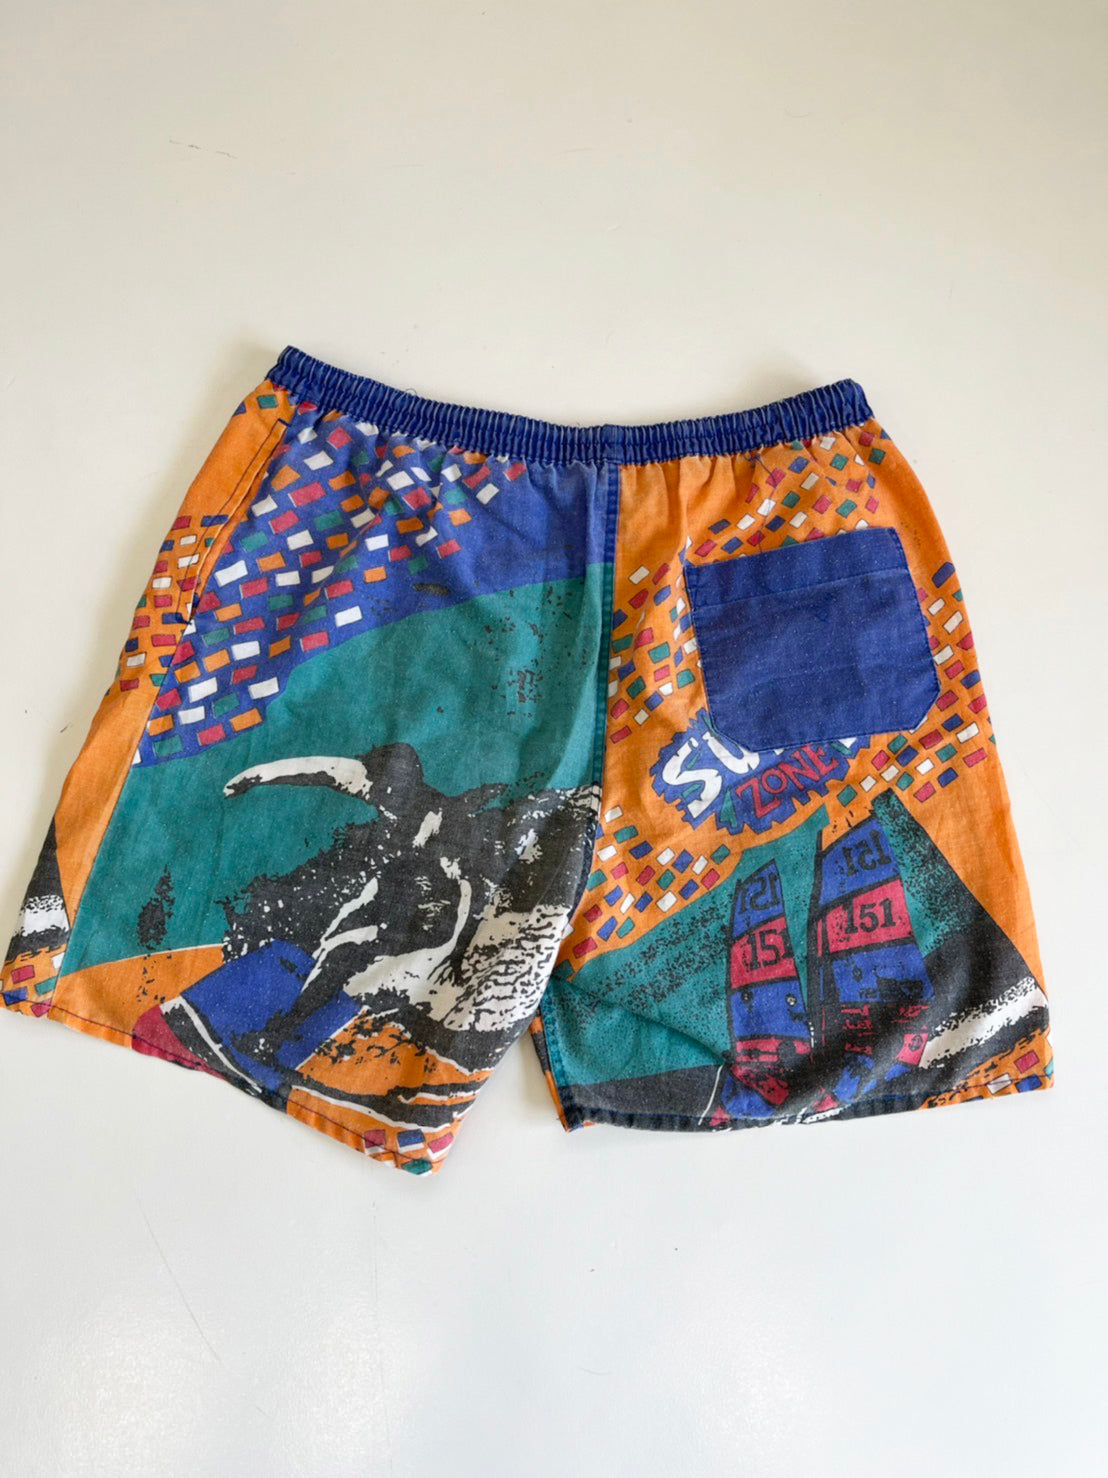 【EURO vintage 】SURF ZONE beach shorts ヨーロッパ メンズ 水着 サーフパンツ ビーチショーツ (men's L相当）